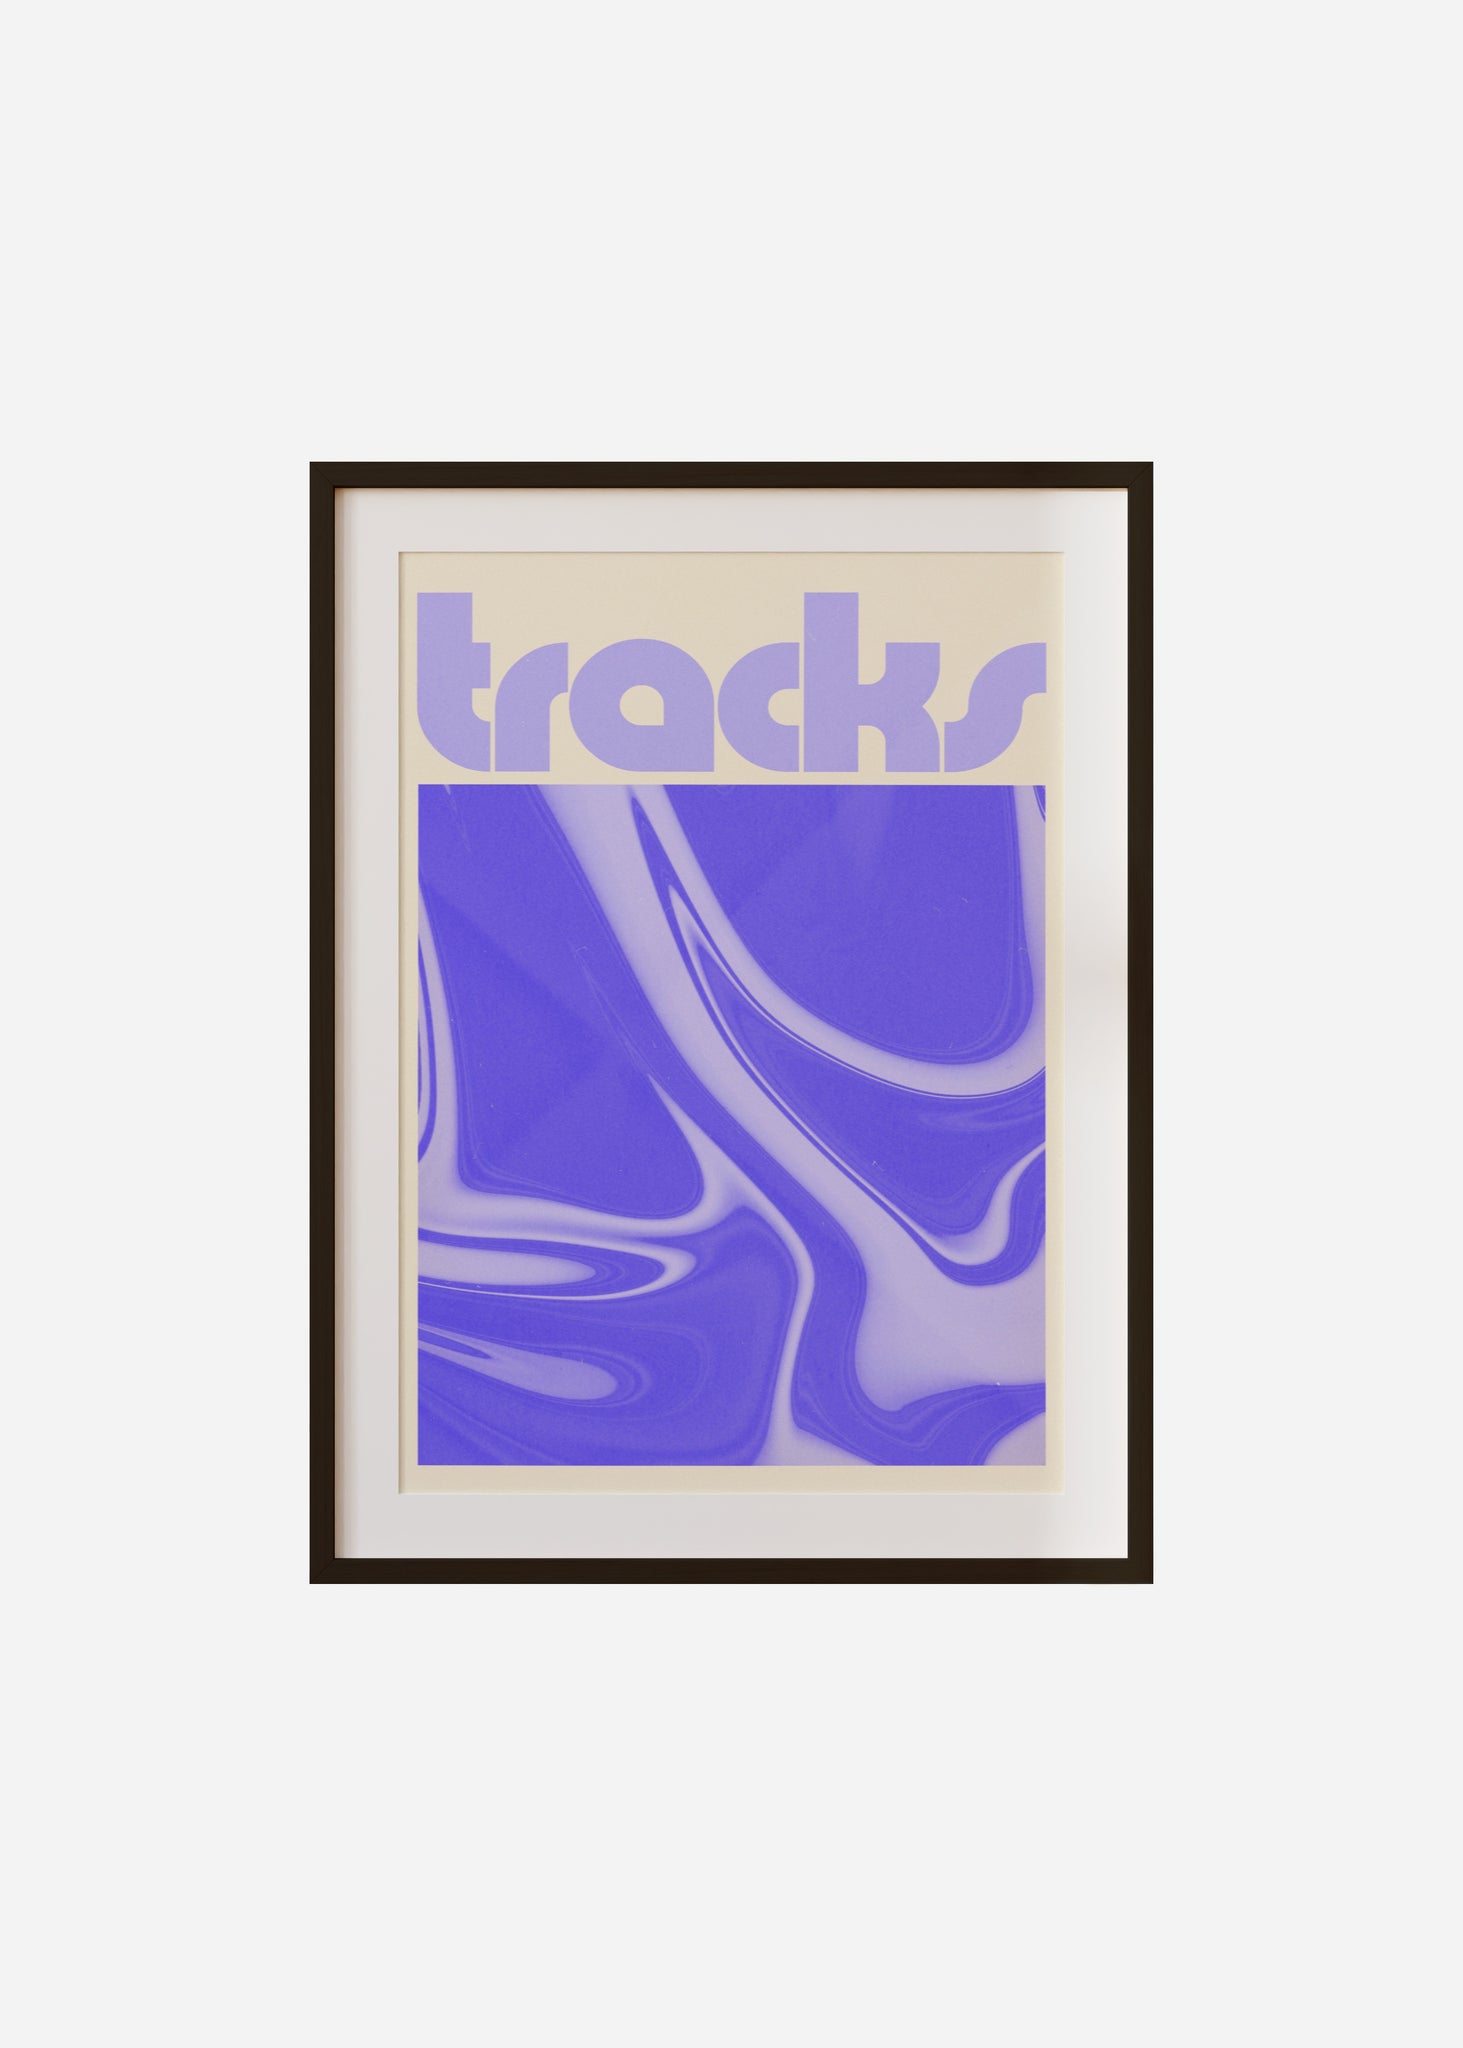 tracks Framed & Mounted Print